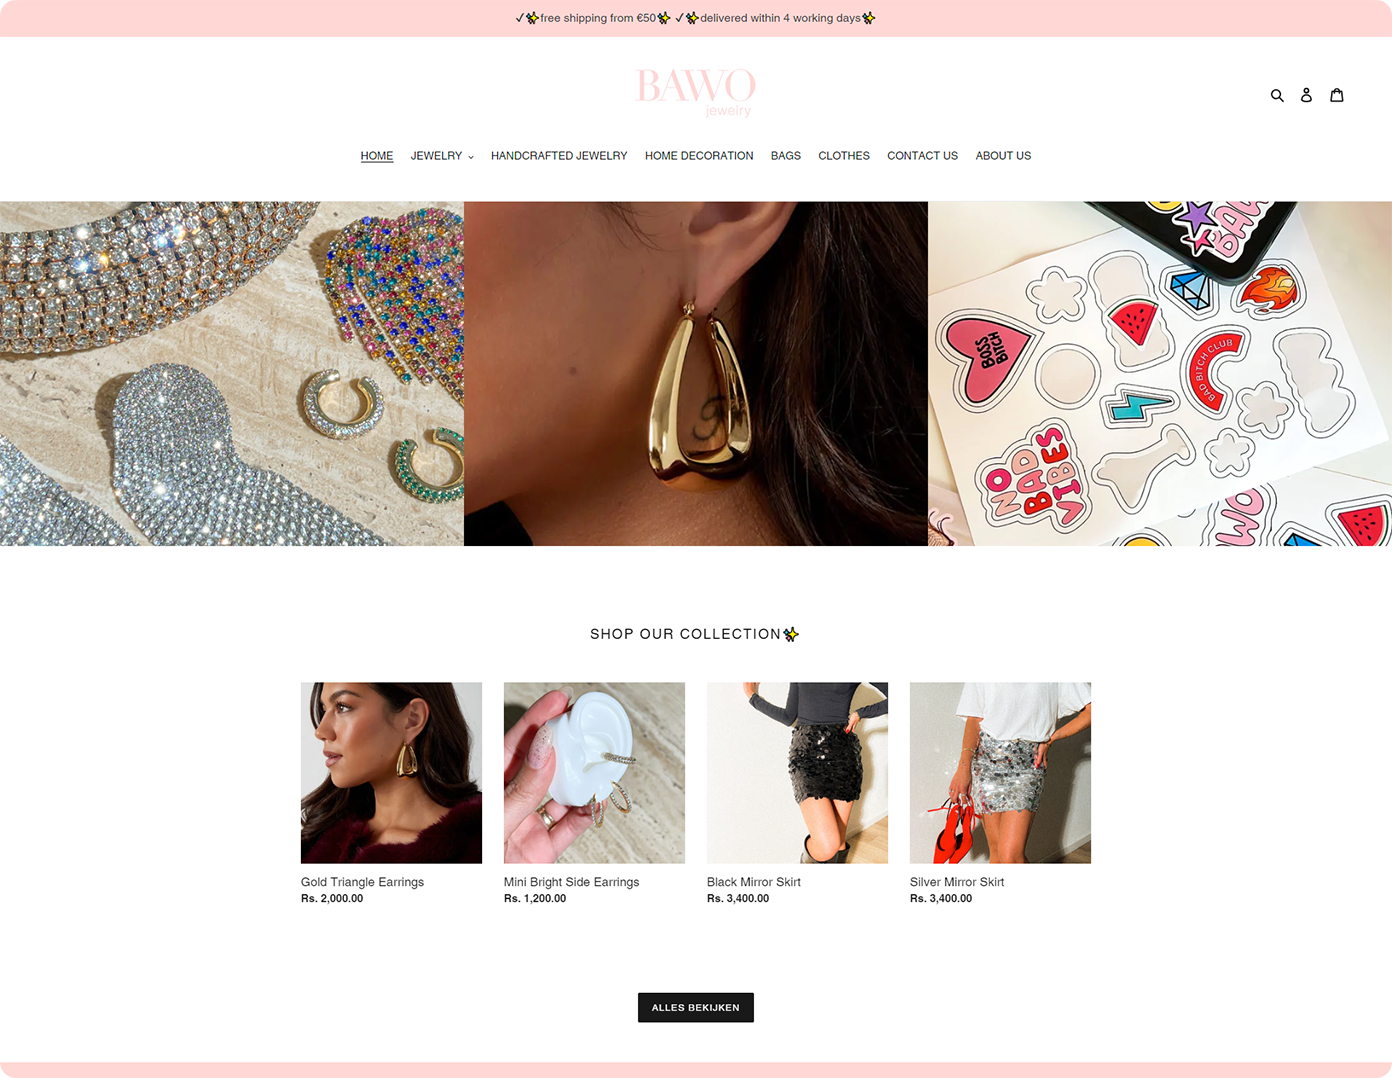 Bawo Jewelry’s home page